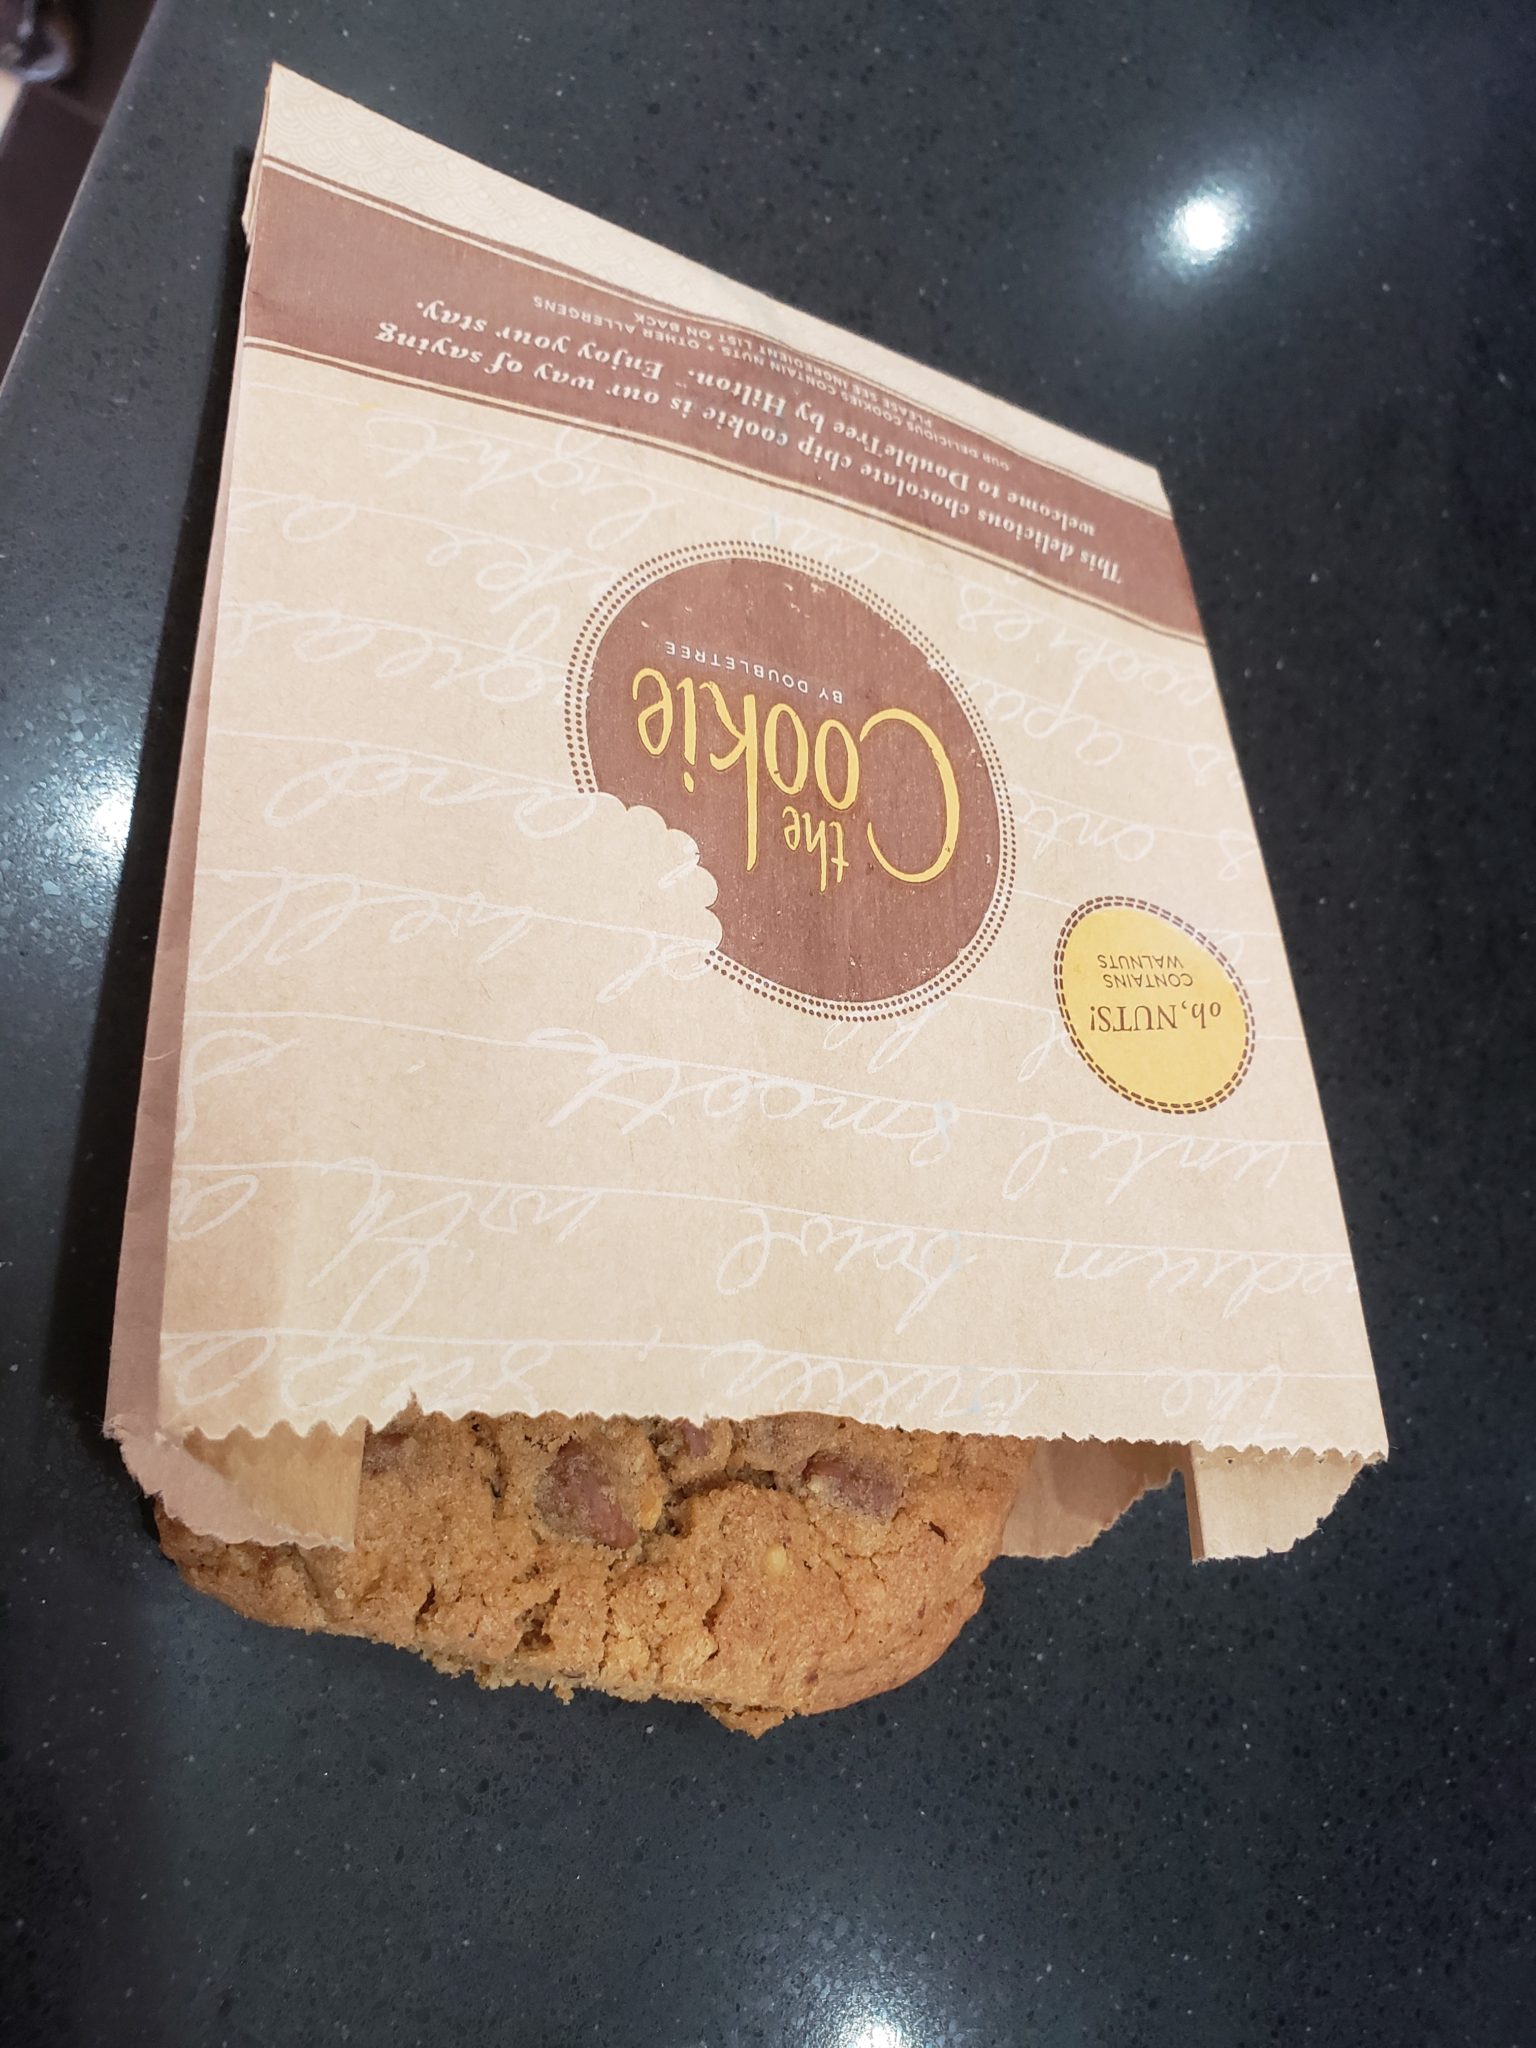 a cookie in a paper bag